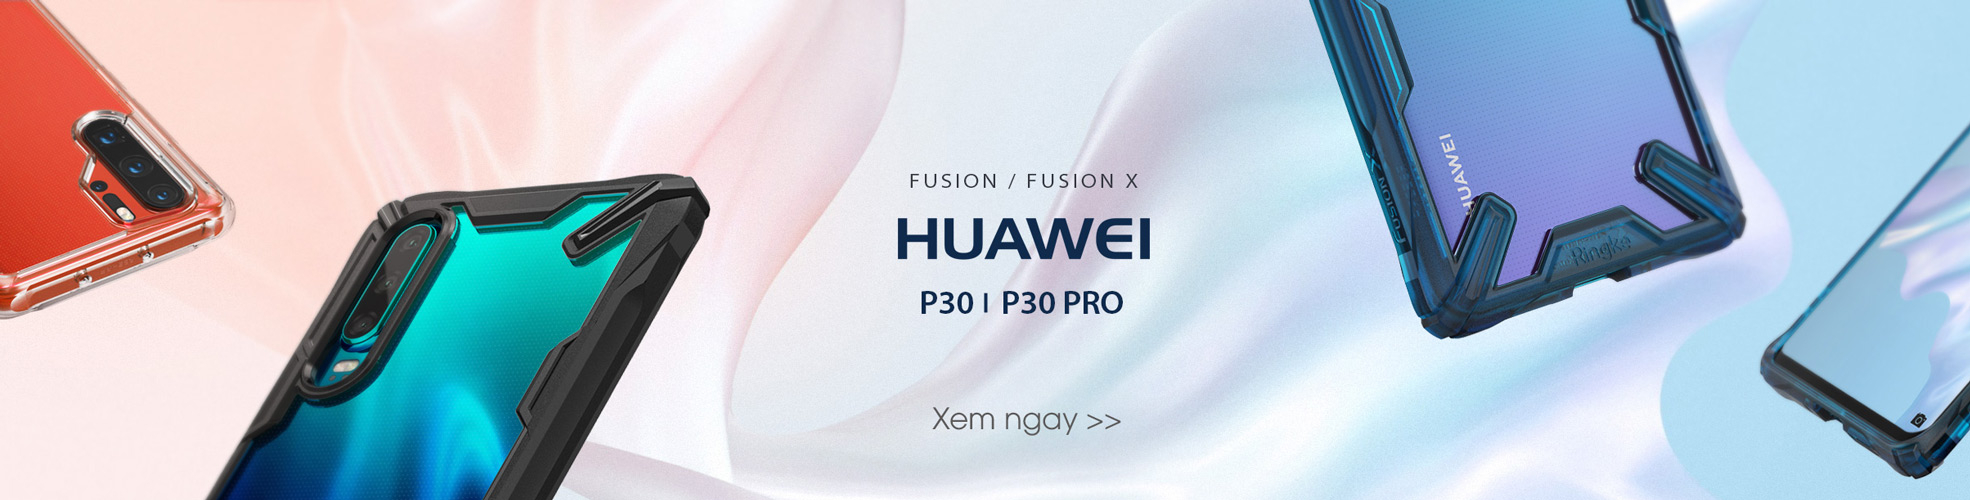 Huawei P30 Pro